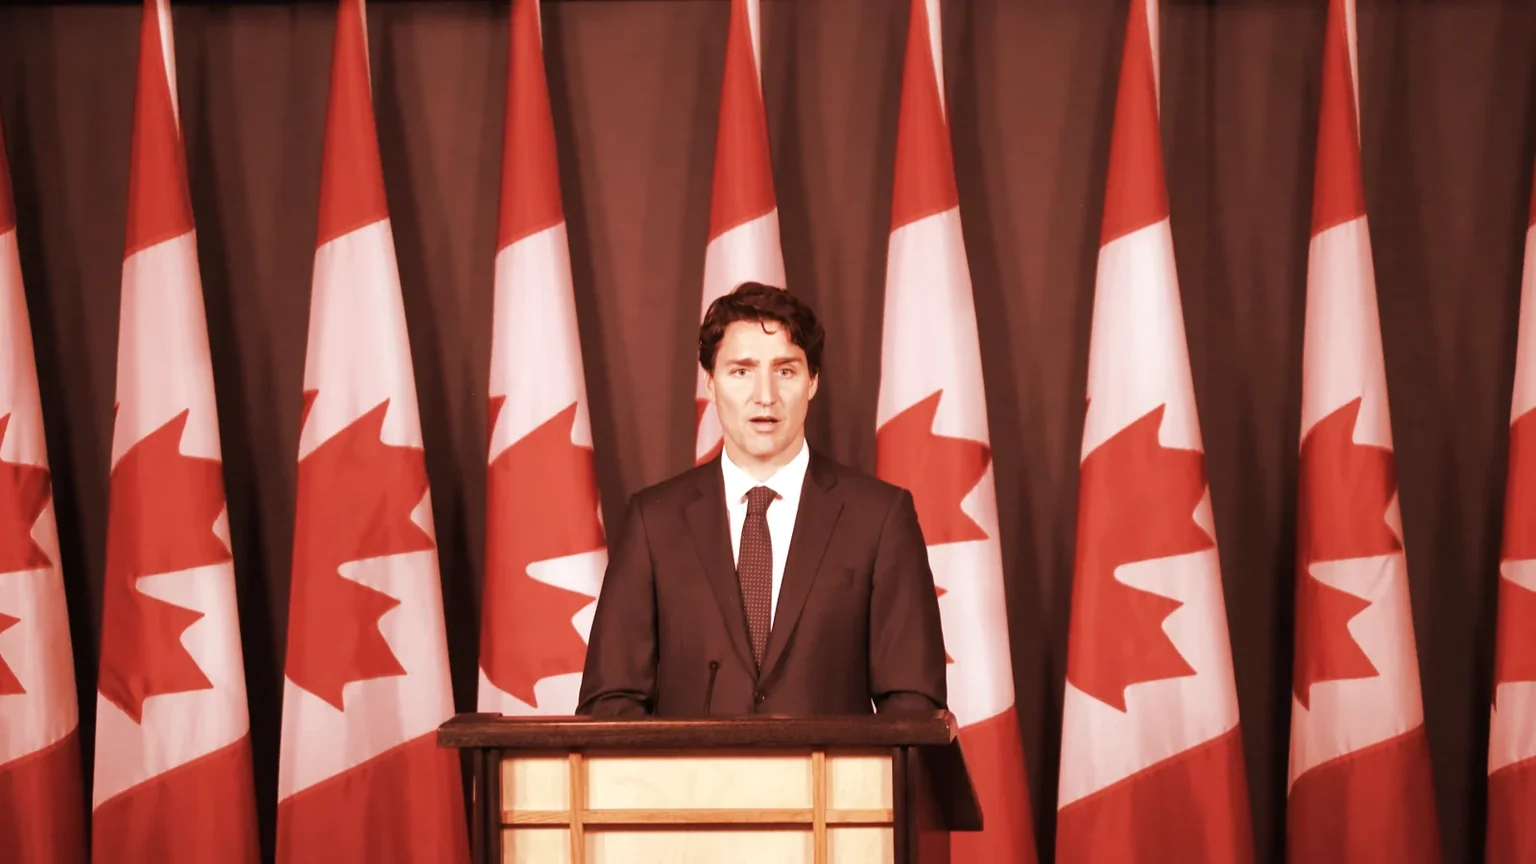 Canadian Prime Minister Justin Trudeau. Image: Shutterstock